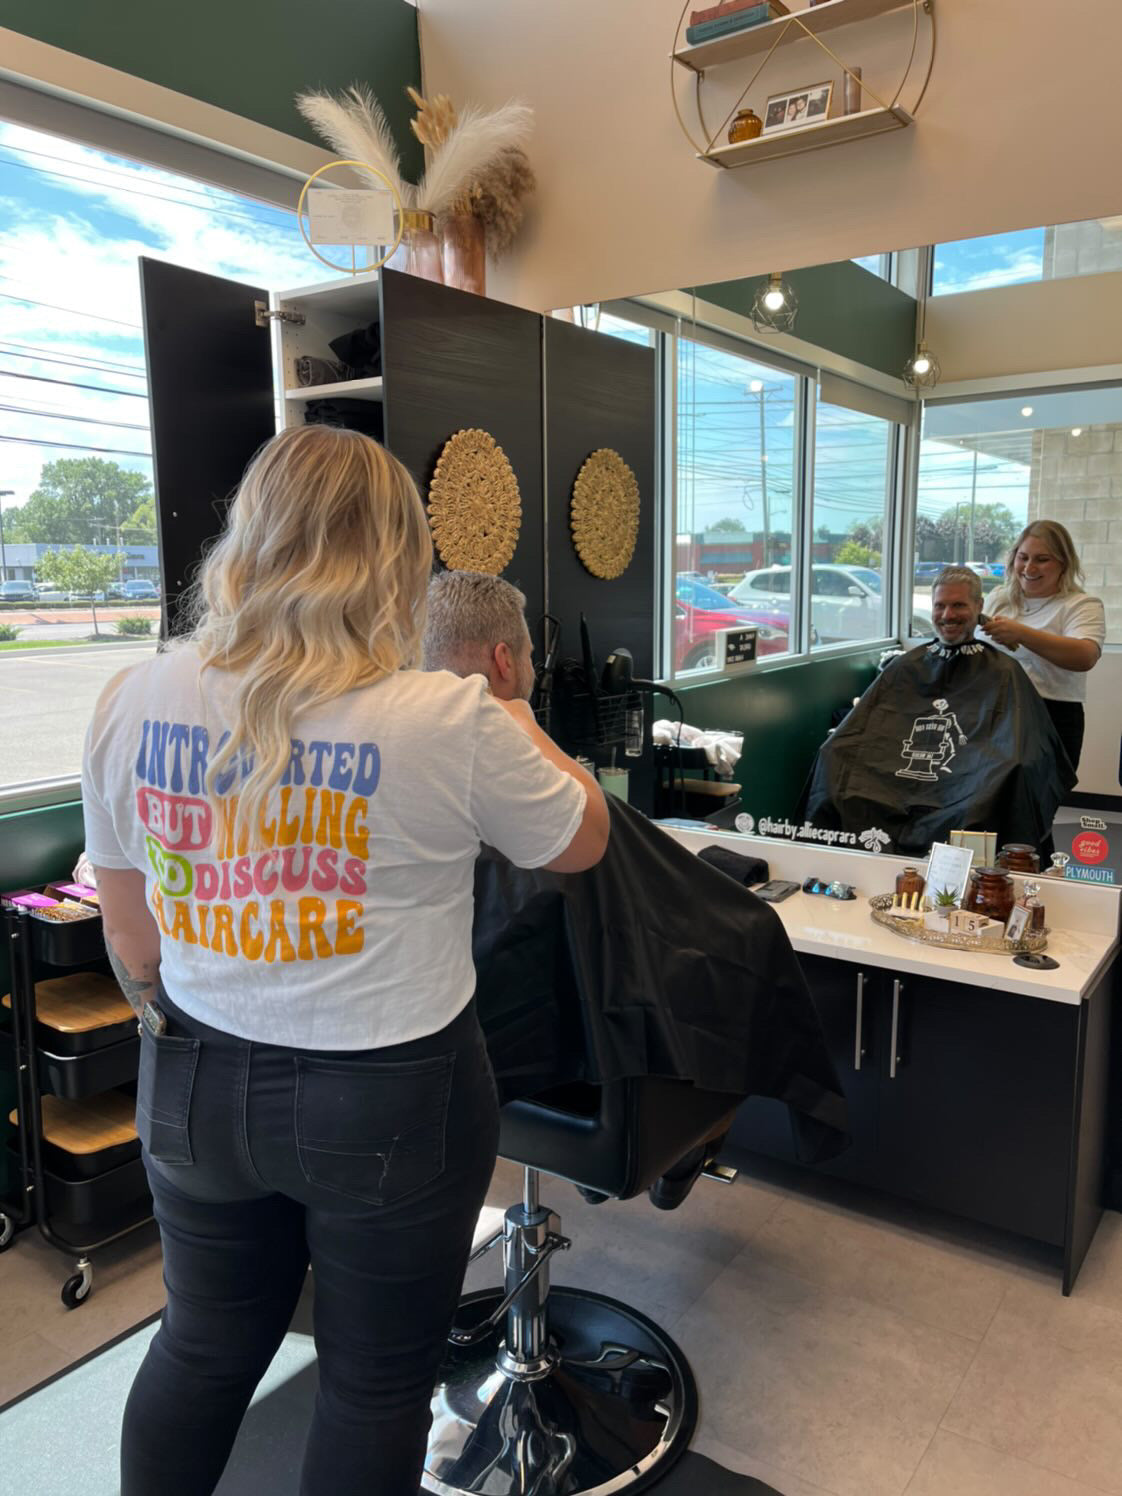 Hair stylist cutting hair in salon wearing ready to dye apparel hair stylist t-shirt